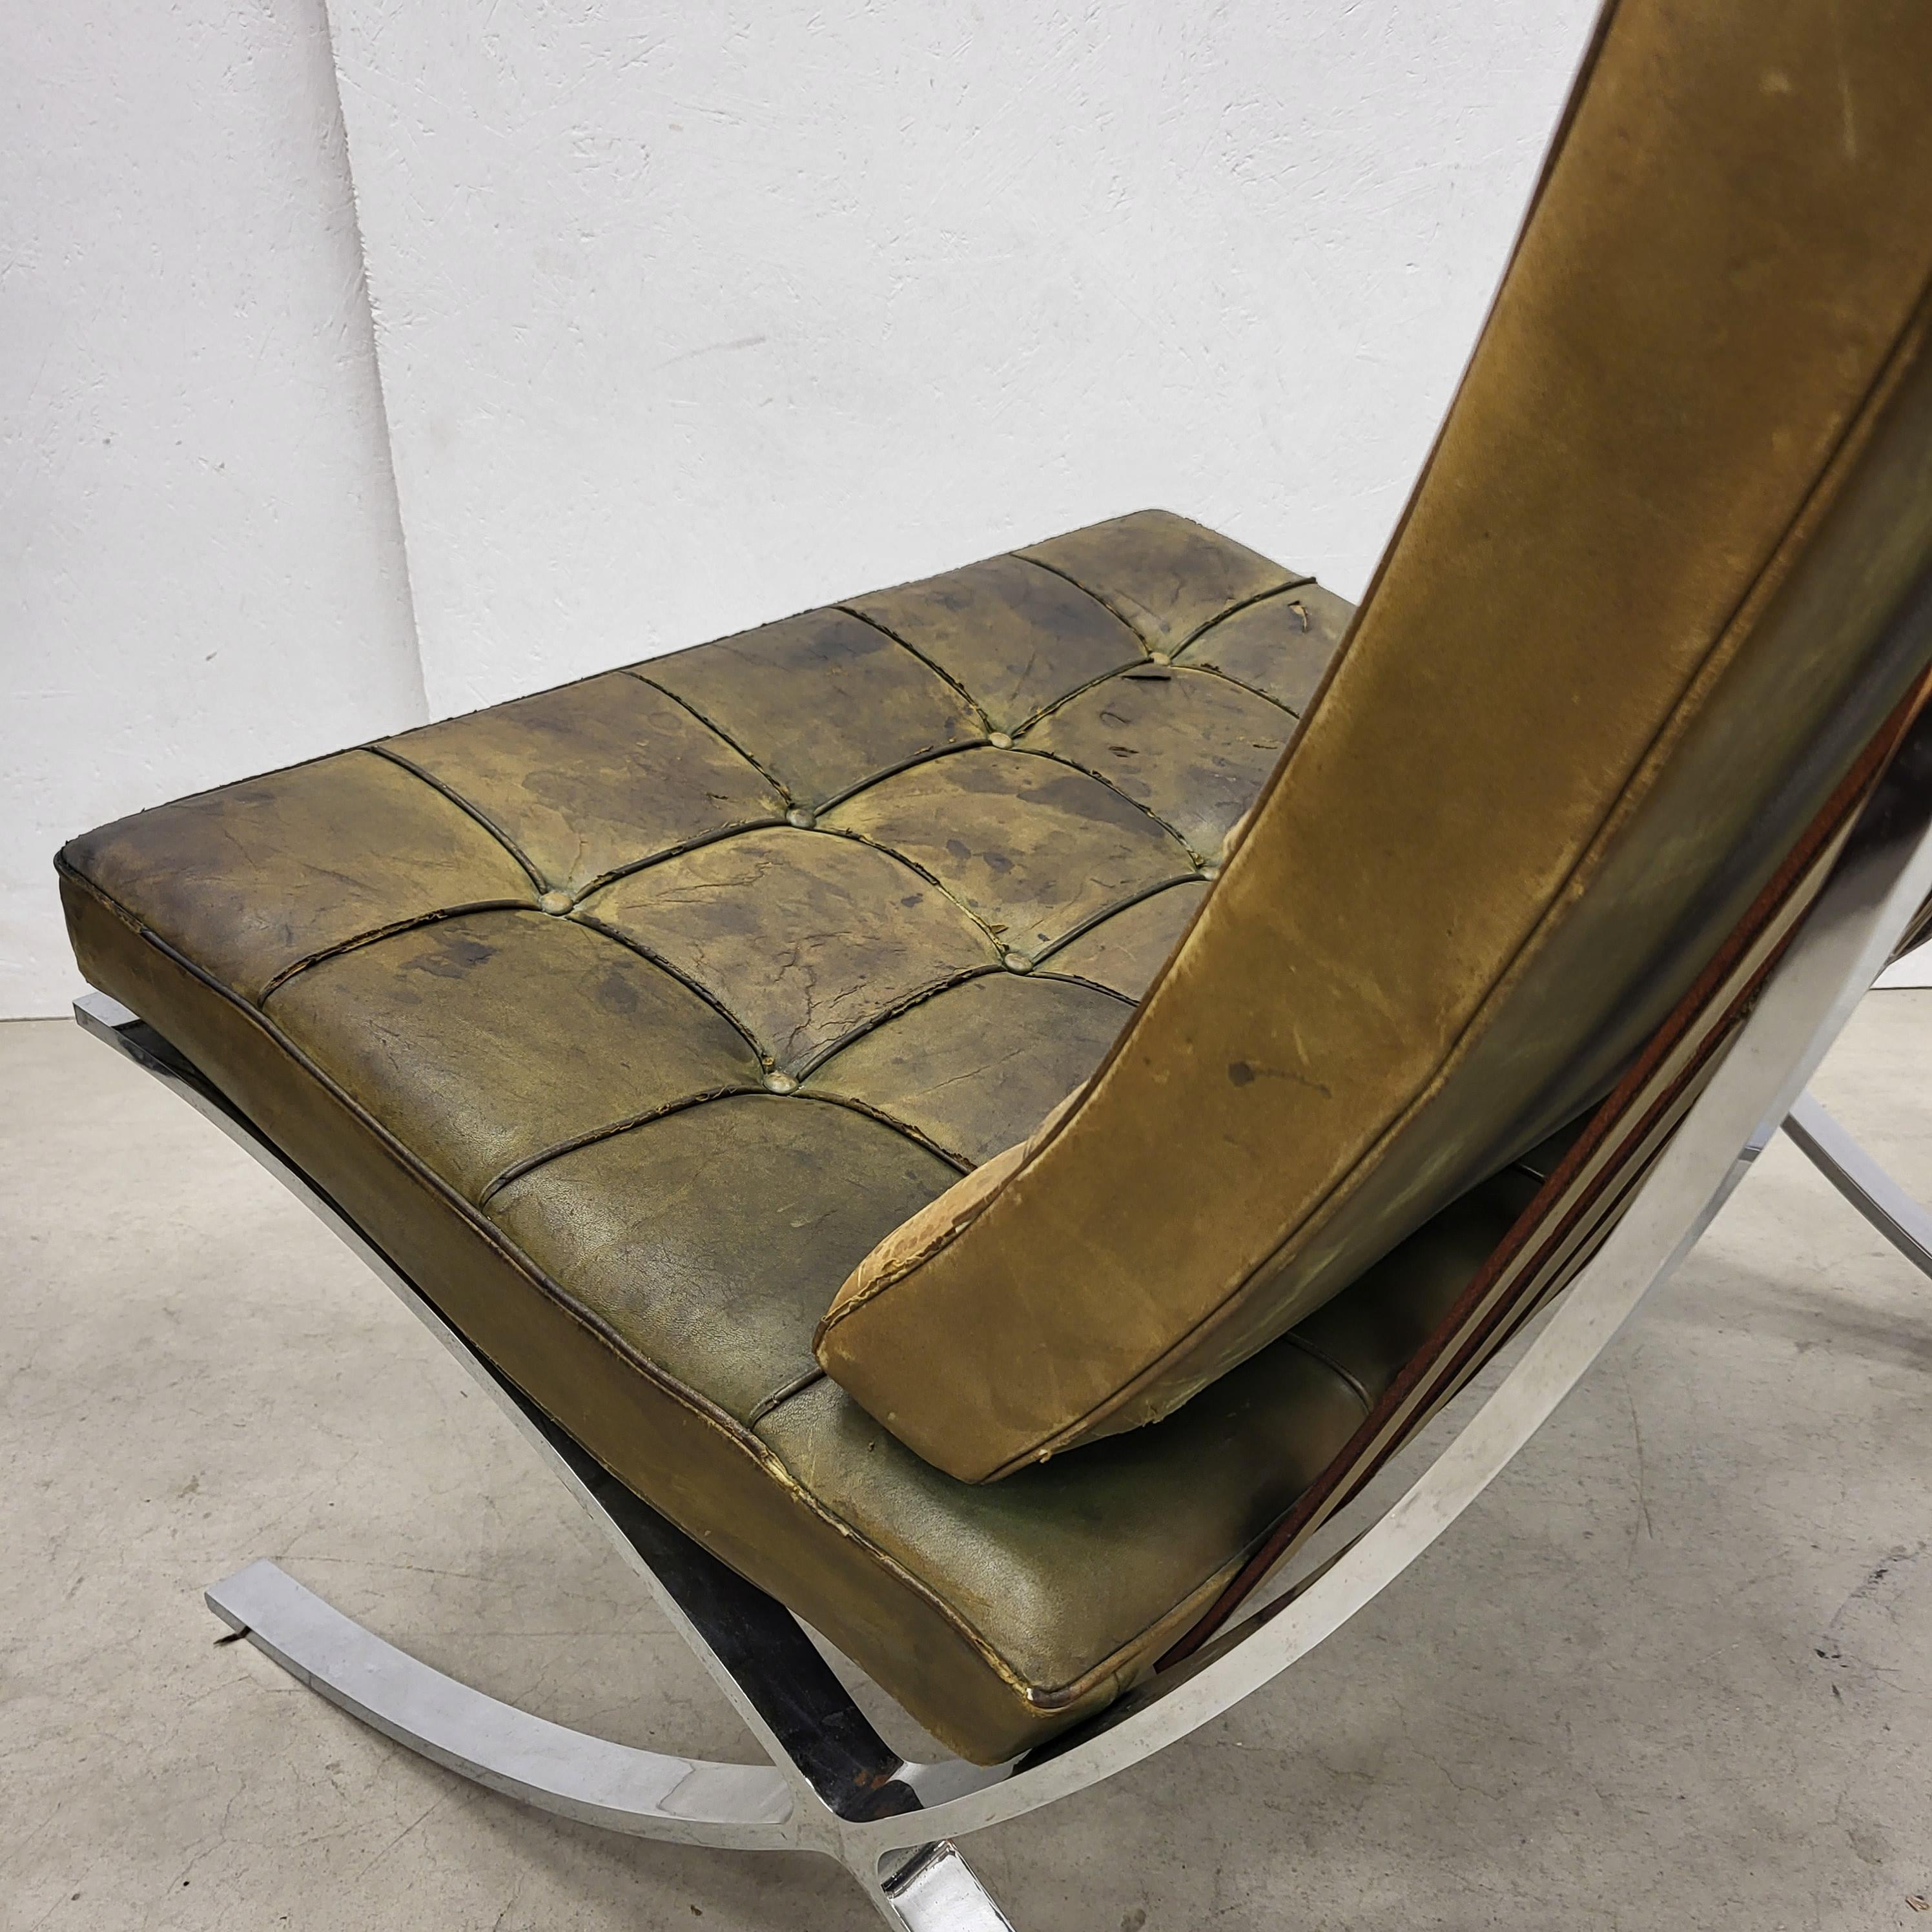 Olivgrüner Barcelona-Stuhl von Mies van der Rohe Knoll, 1970er Jahre (Edelstahl)